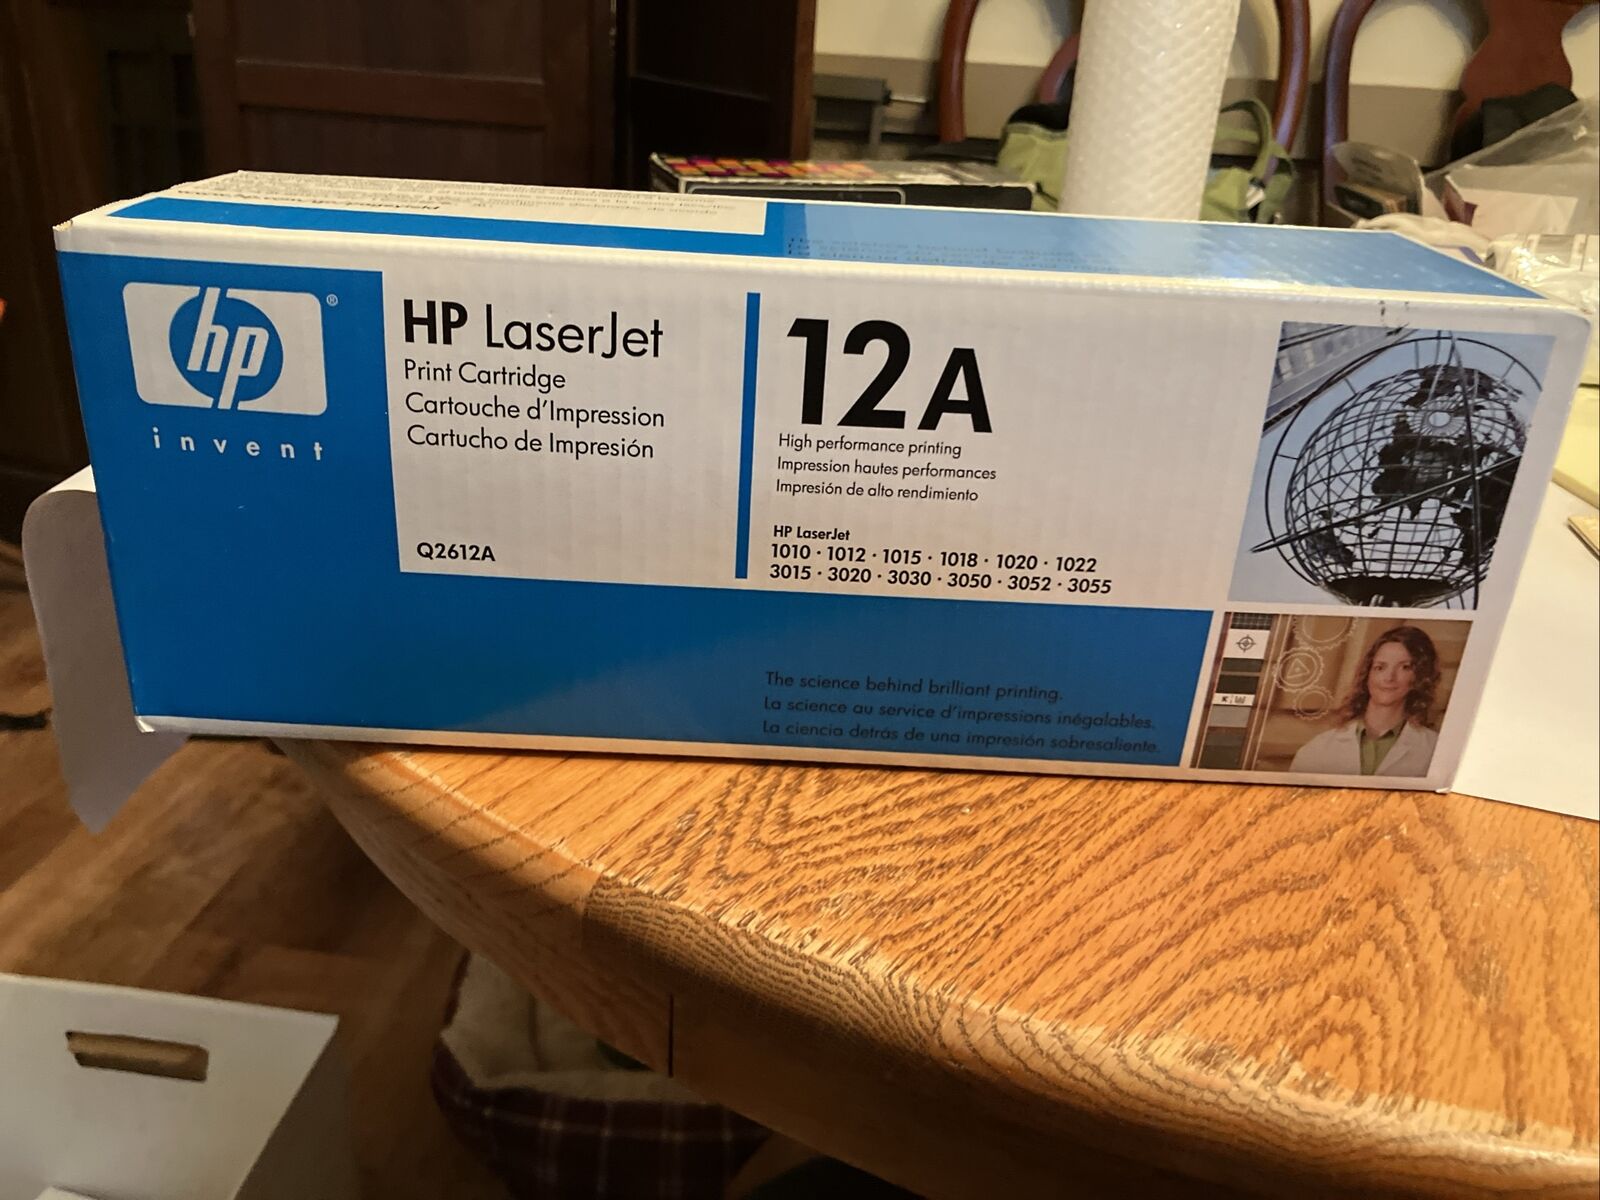 HP LaserJet Print Cartridge 12A New In Box